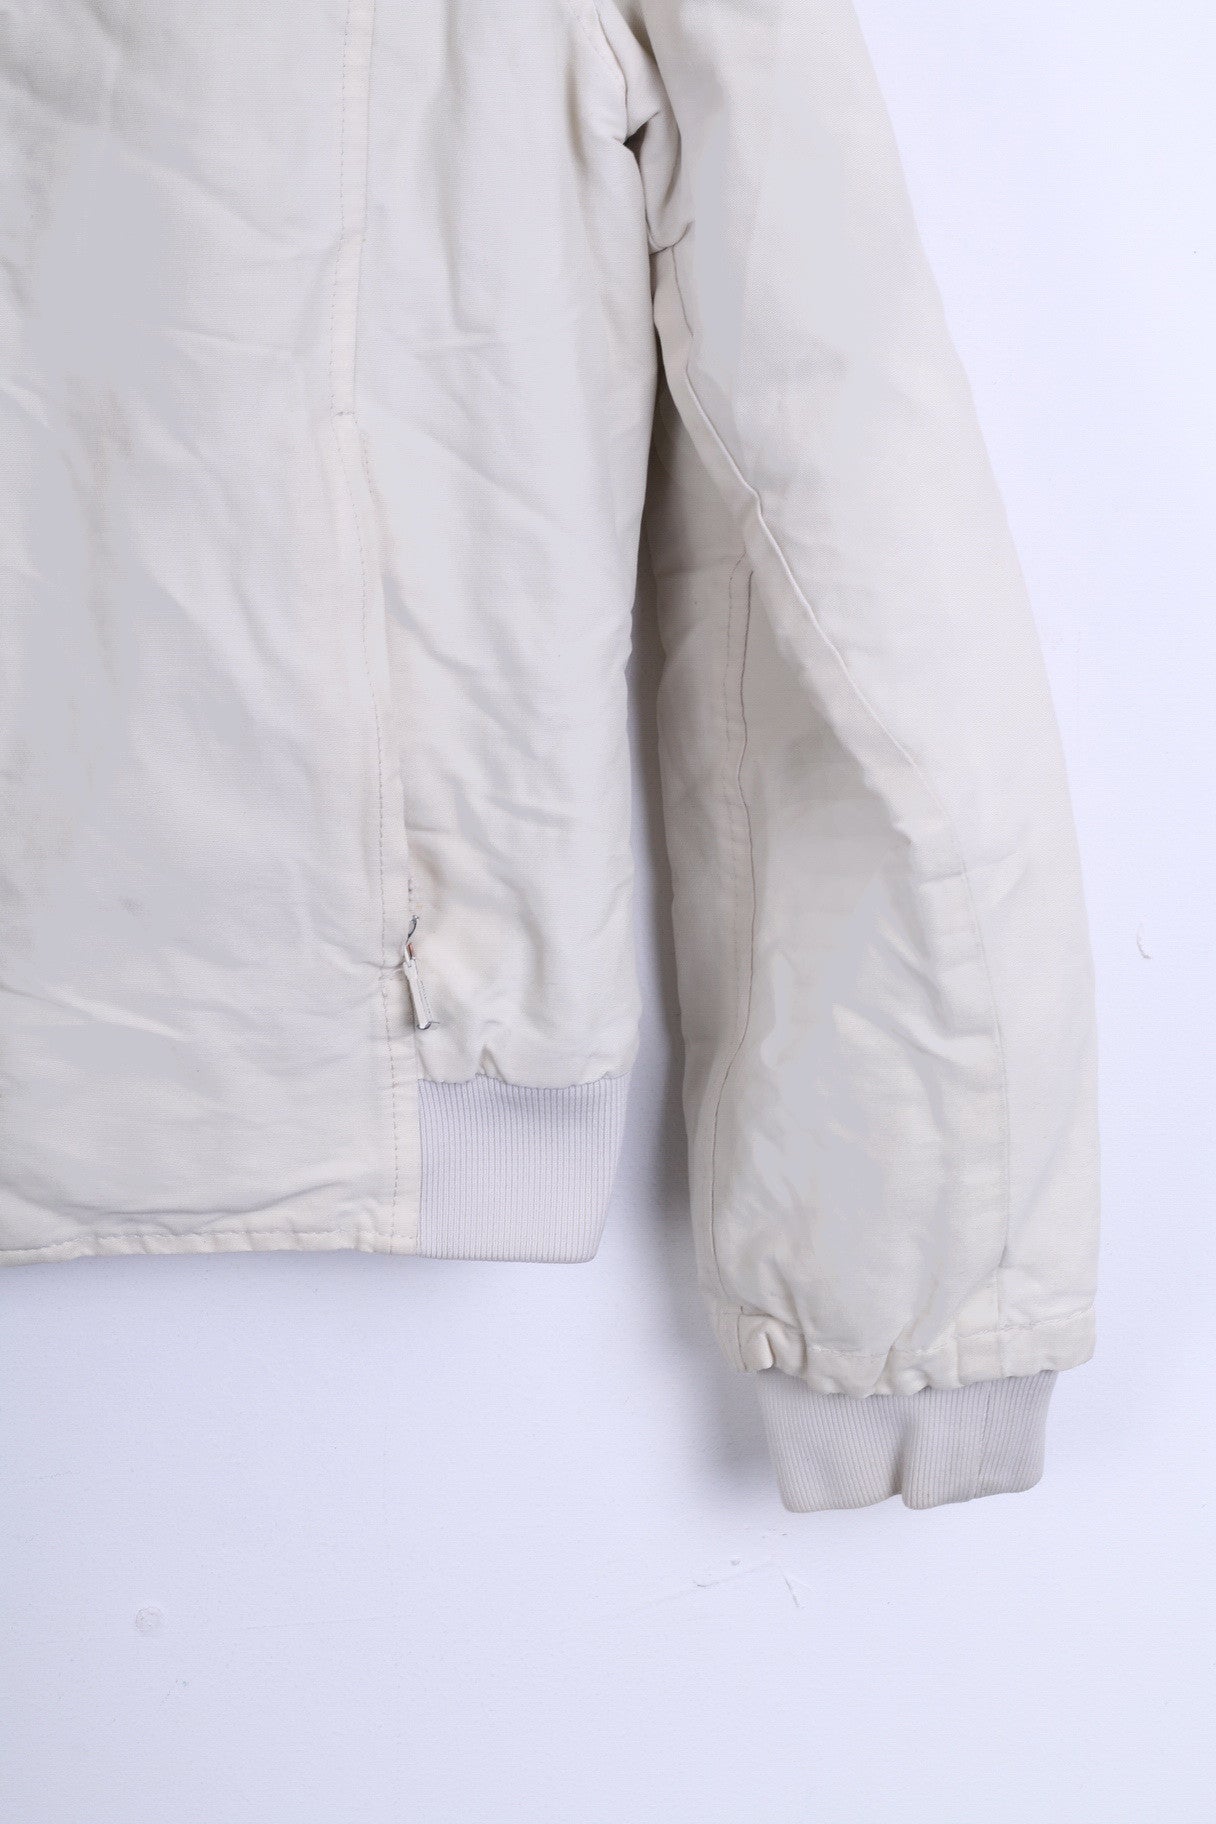 Henri Lloyd W63 Womens 3 M Jacket Ecru Cotton Nylon Winter Padded - RetrospectClothes